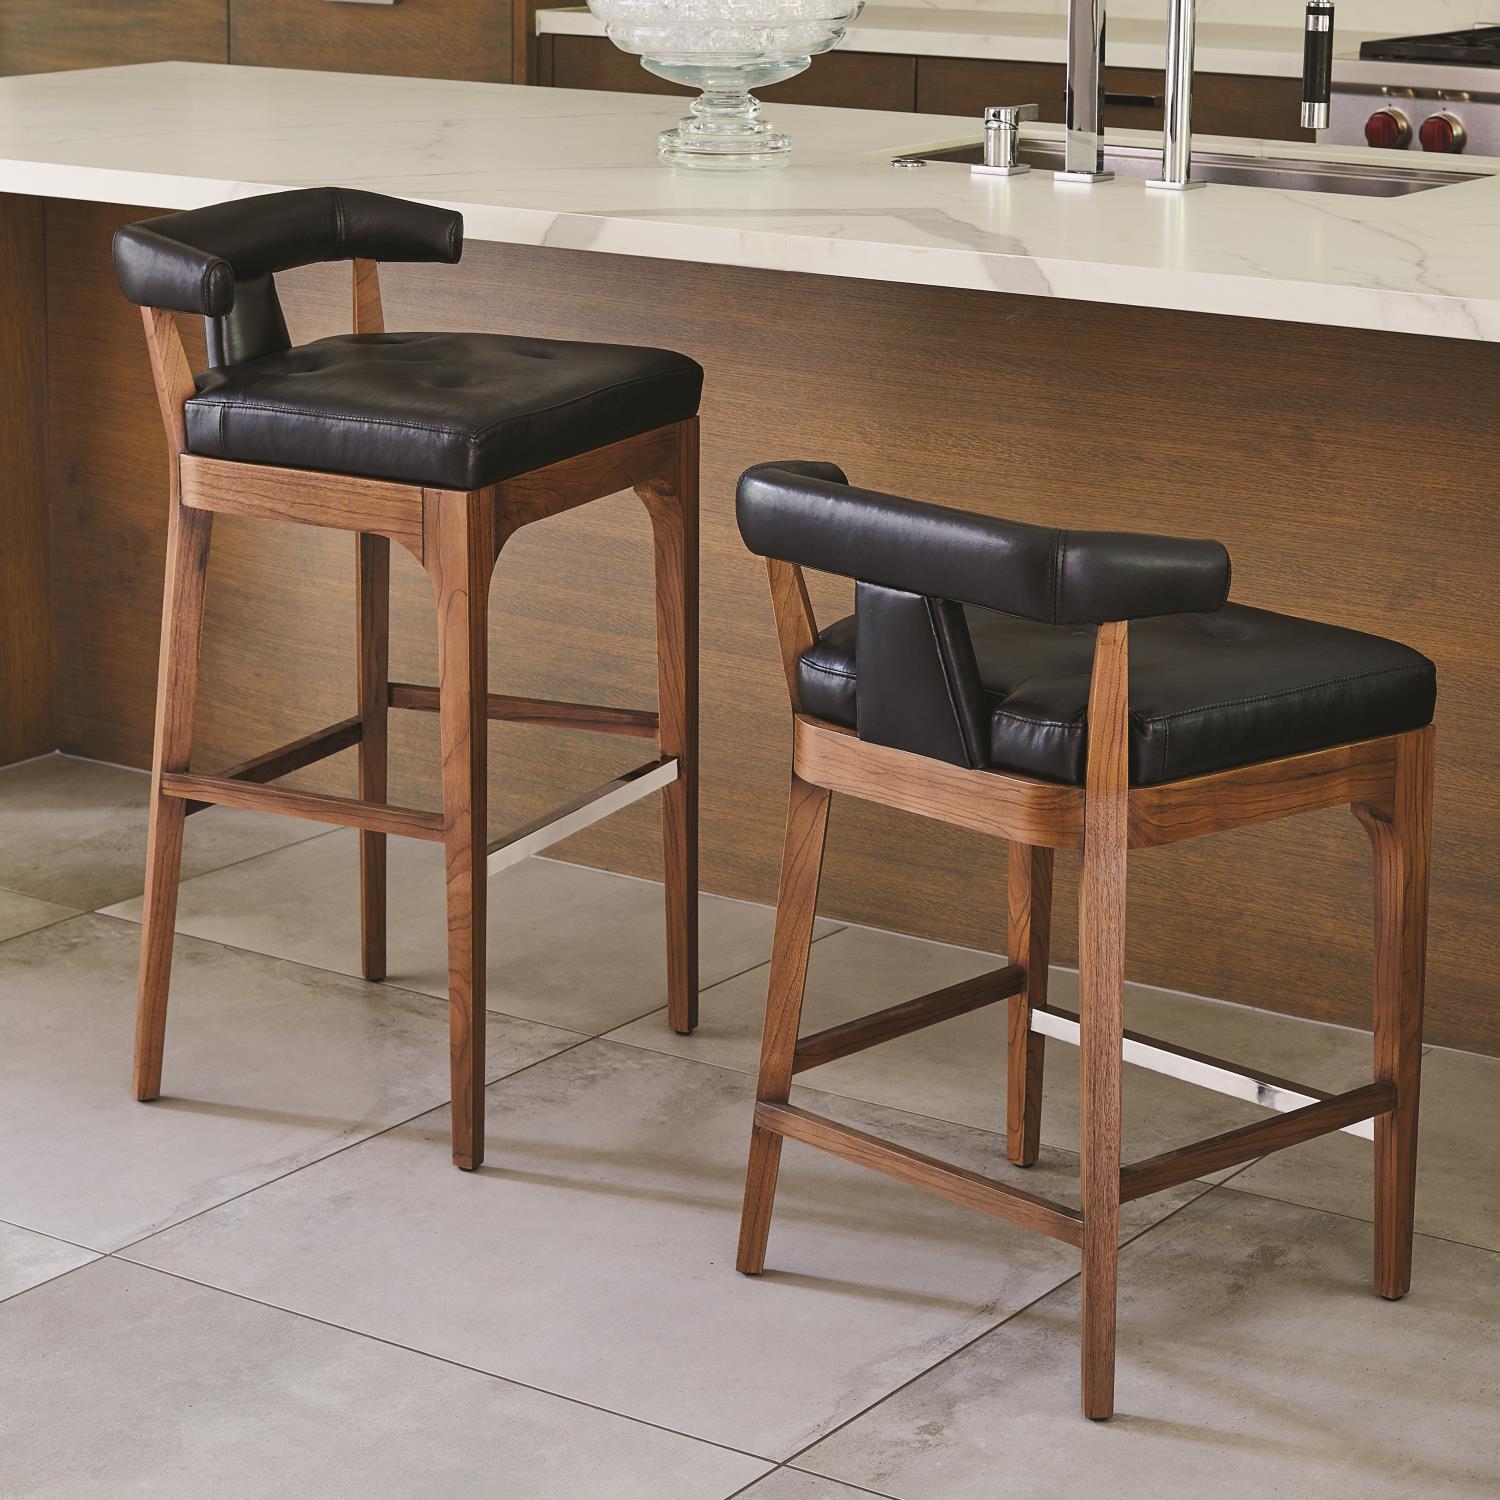 Moderno Counter Stool - Black Marble Leather - Grats Decor Interior Design & Build Inc.